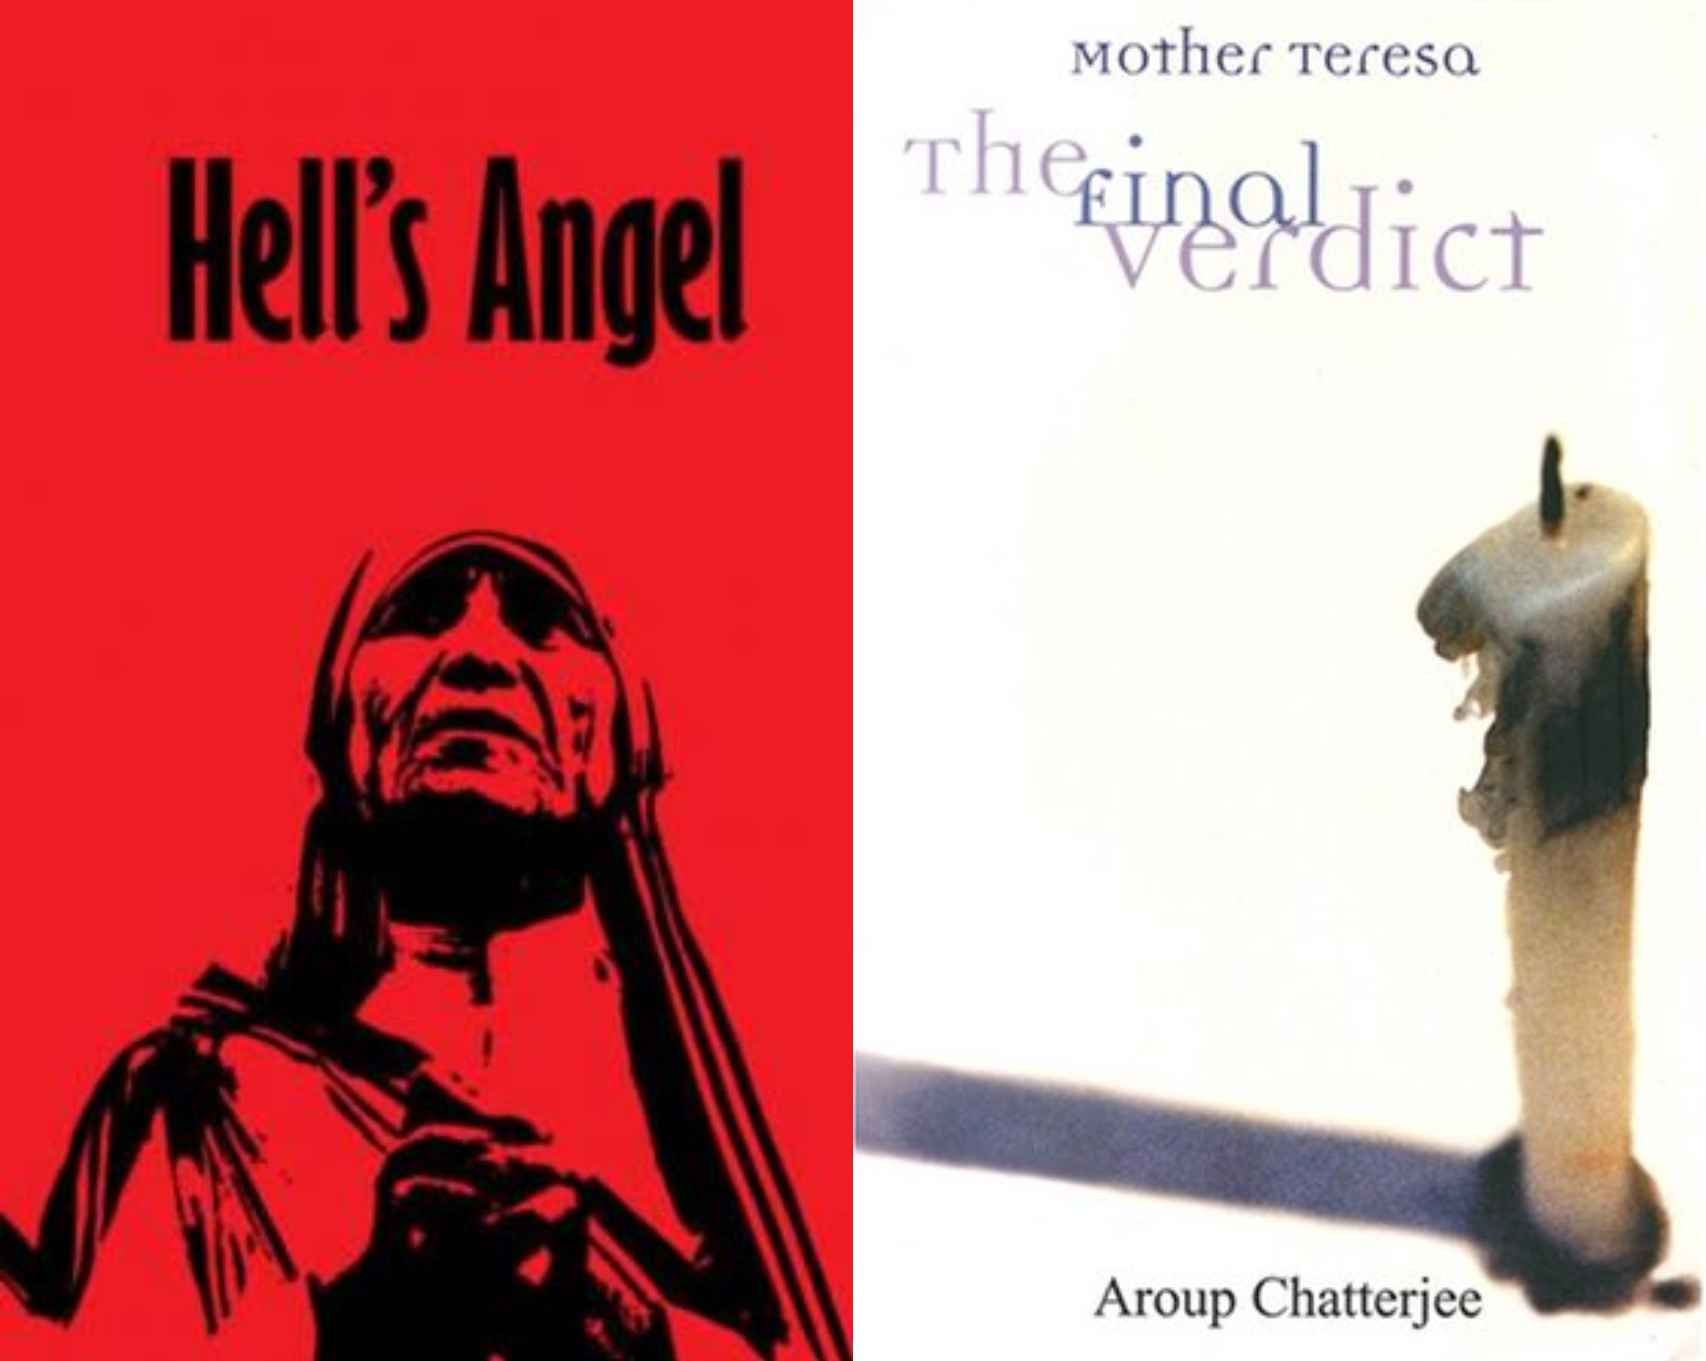 Imagen del documental 'Hell's Angel', de Christopher Hitchens; y del libro 'Madre Teresa, el veredicto final', de Aroup Chatterjee.